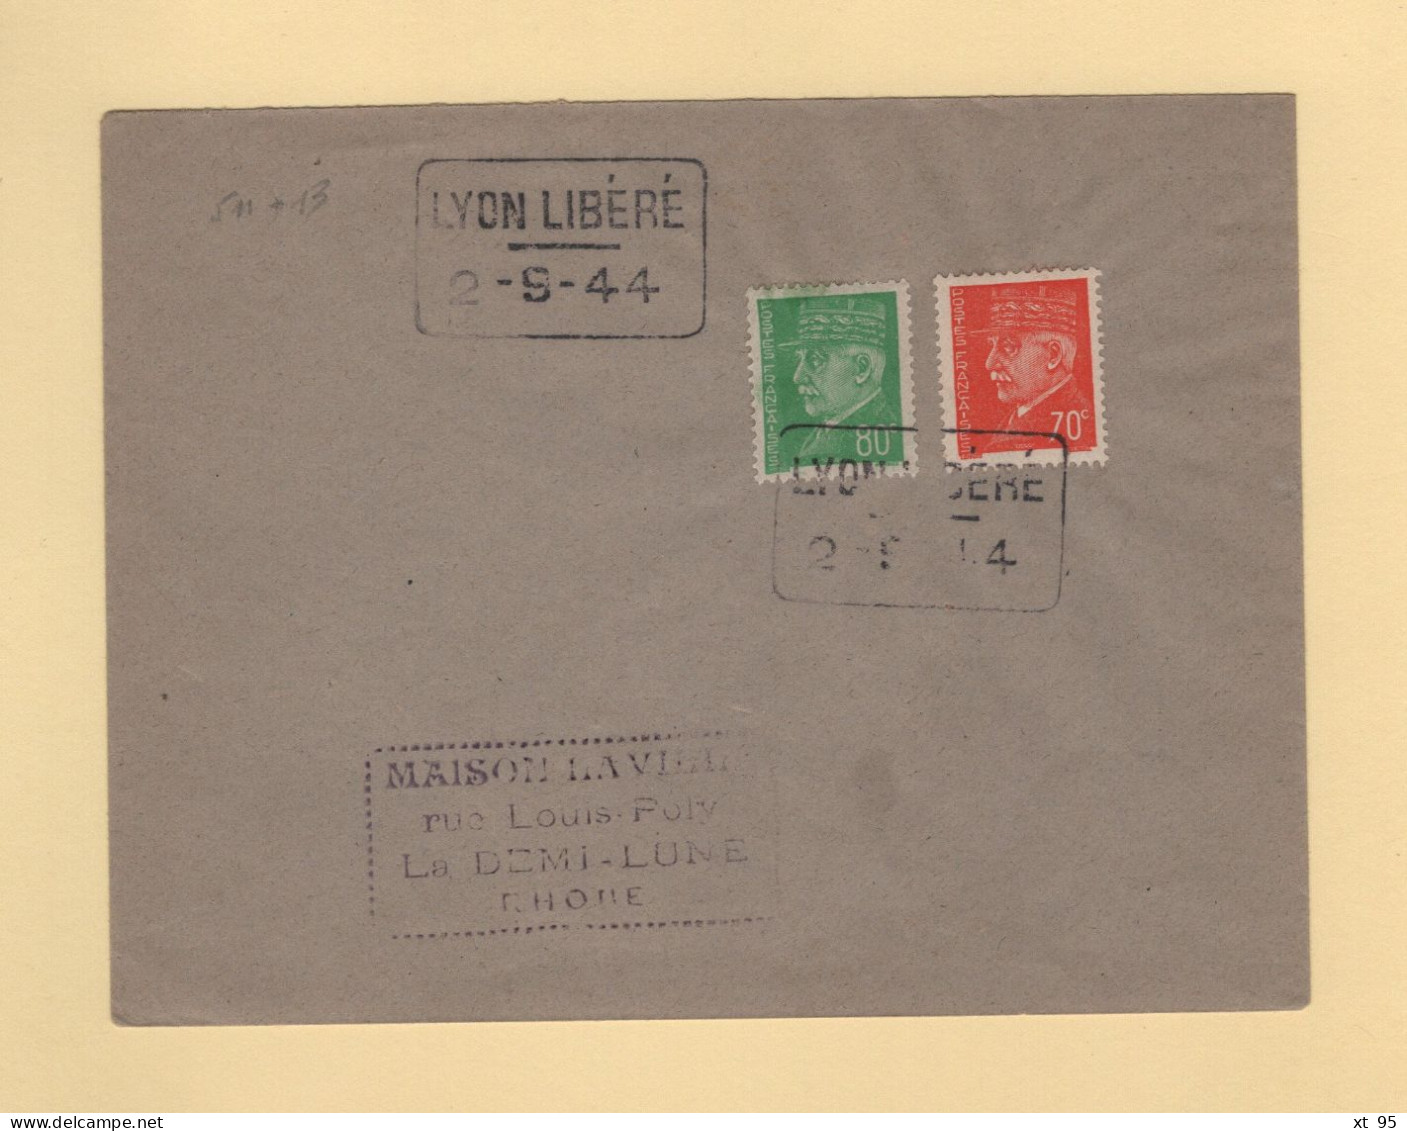 Liberation - Lyon Libere - 2-9-44 - Type Petain - Libération